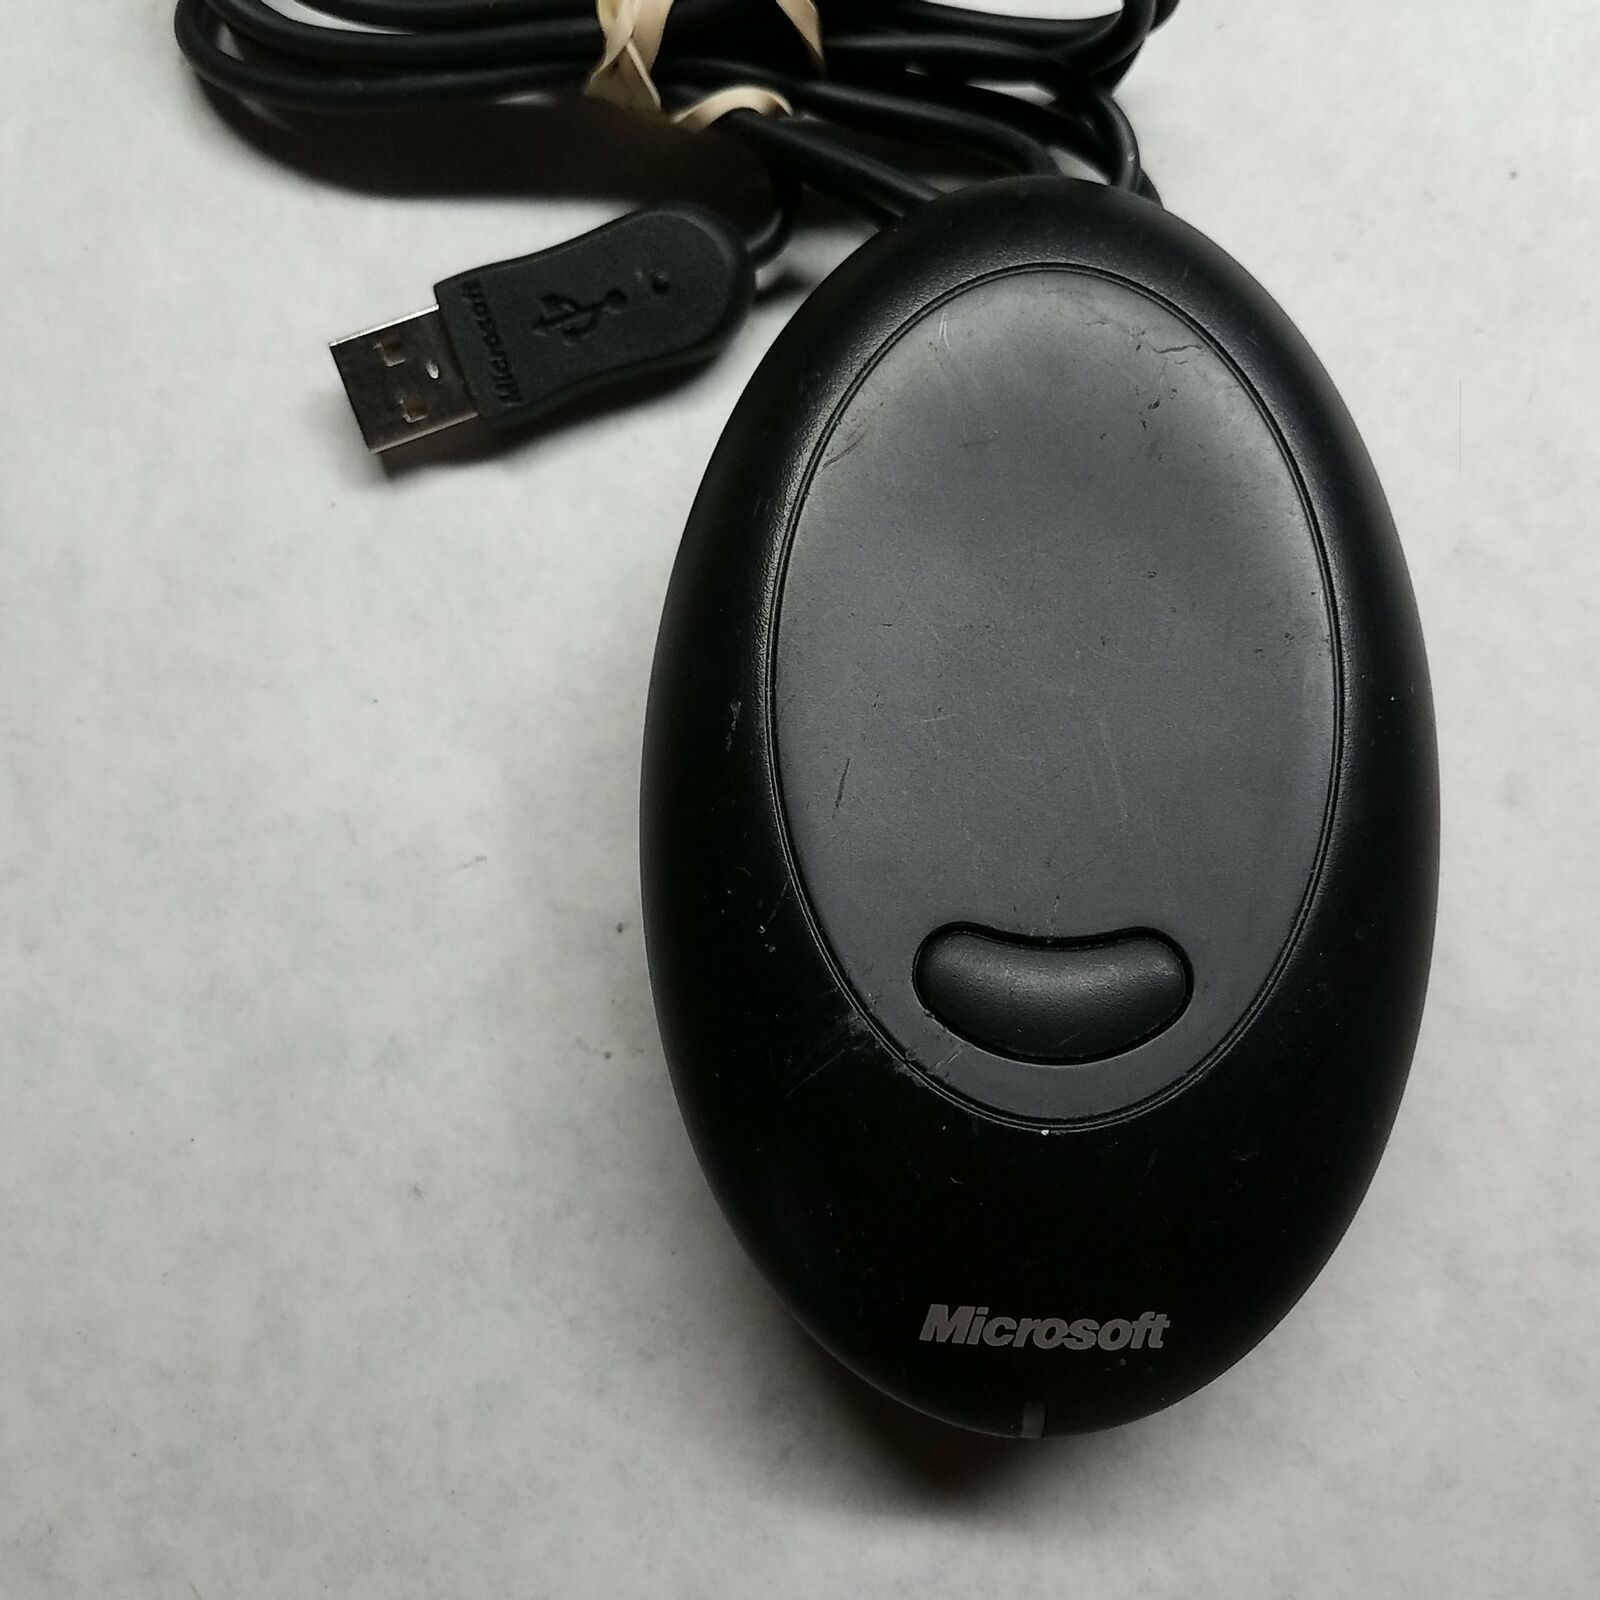 Microsoft Wireless Optical Desktop Mouse Receiver v1.0 Model 1053 P/N: X806444-0 - $8.02